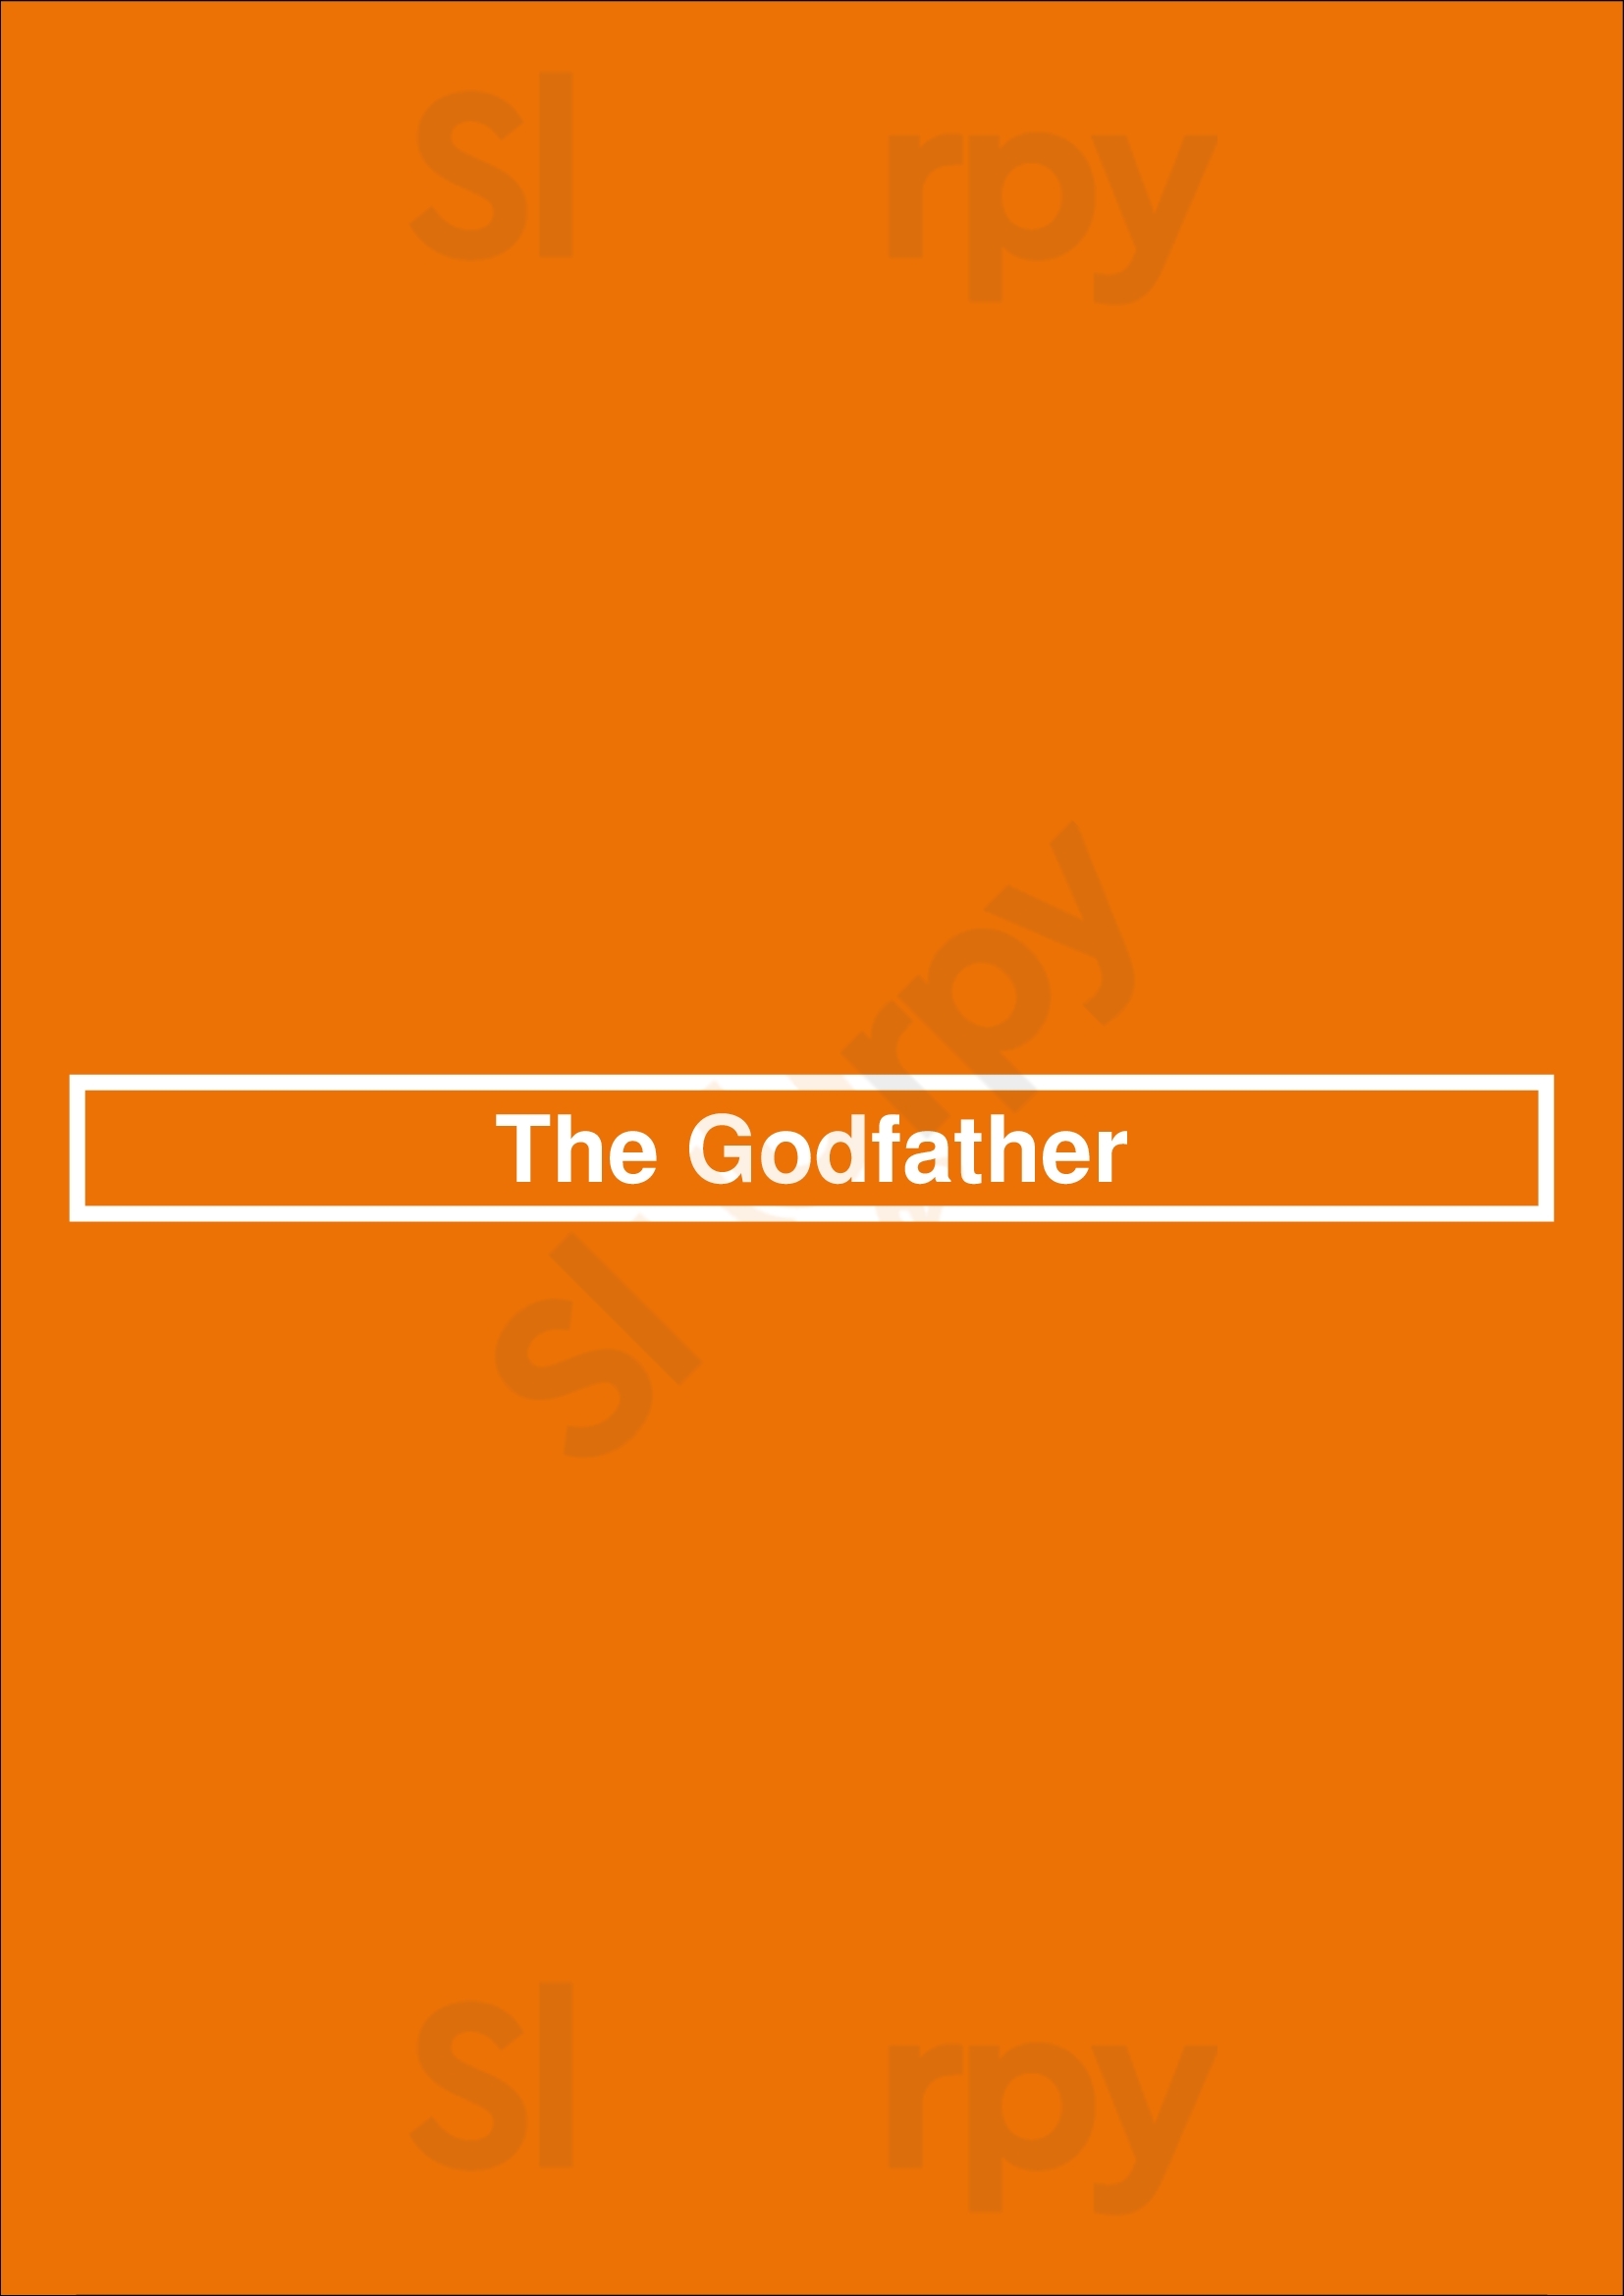 The Godfather Restaurant Paris Menu - 1